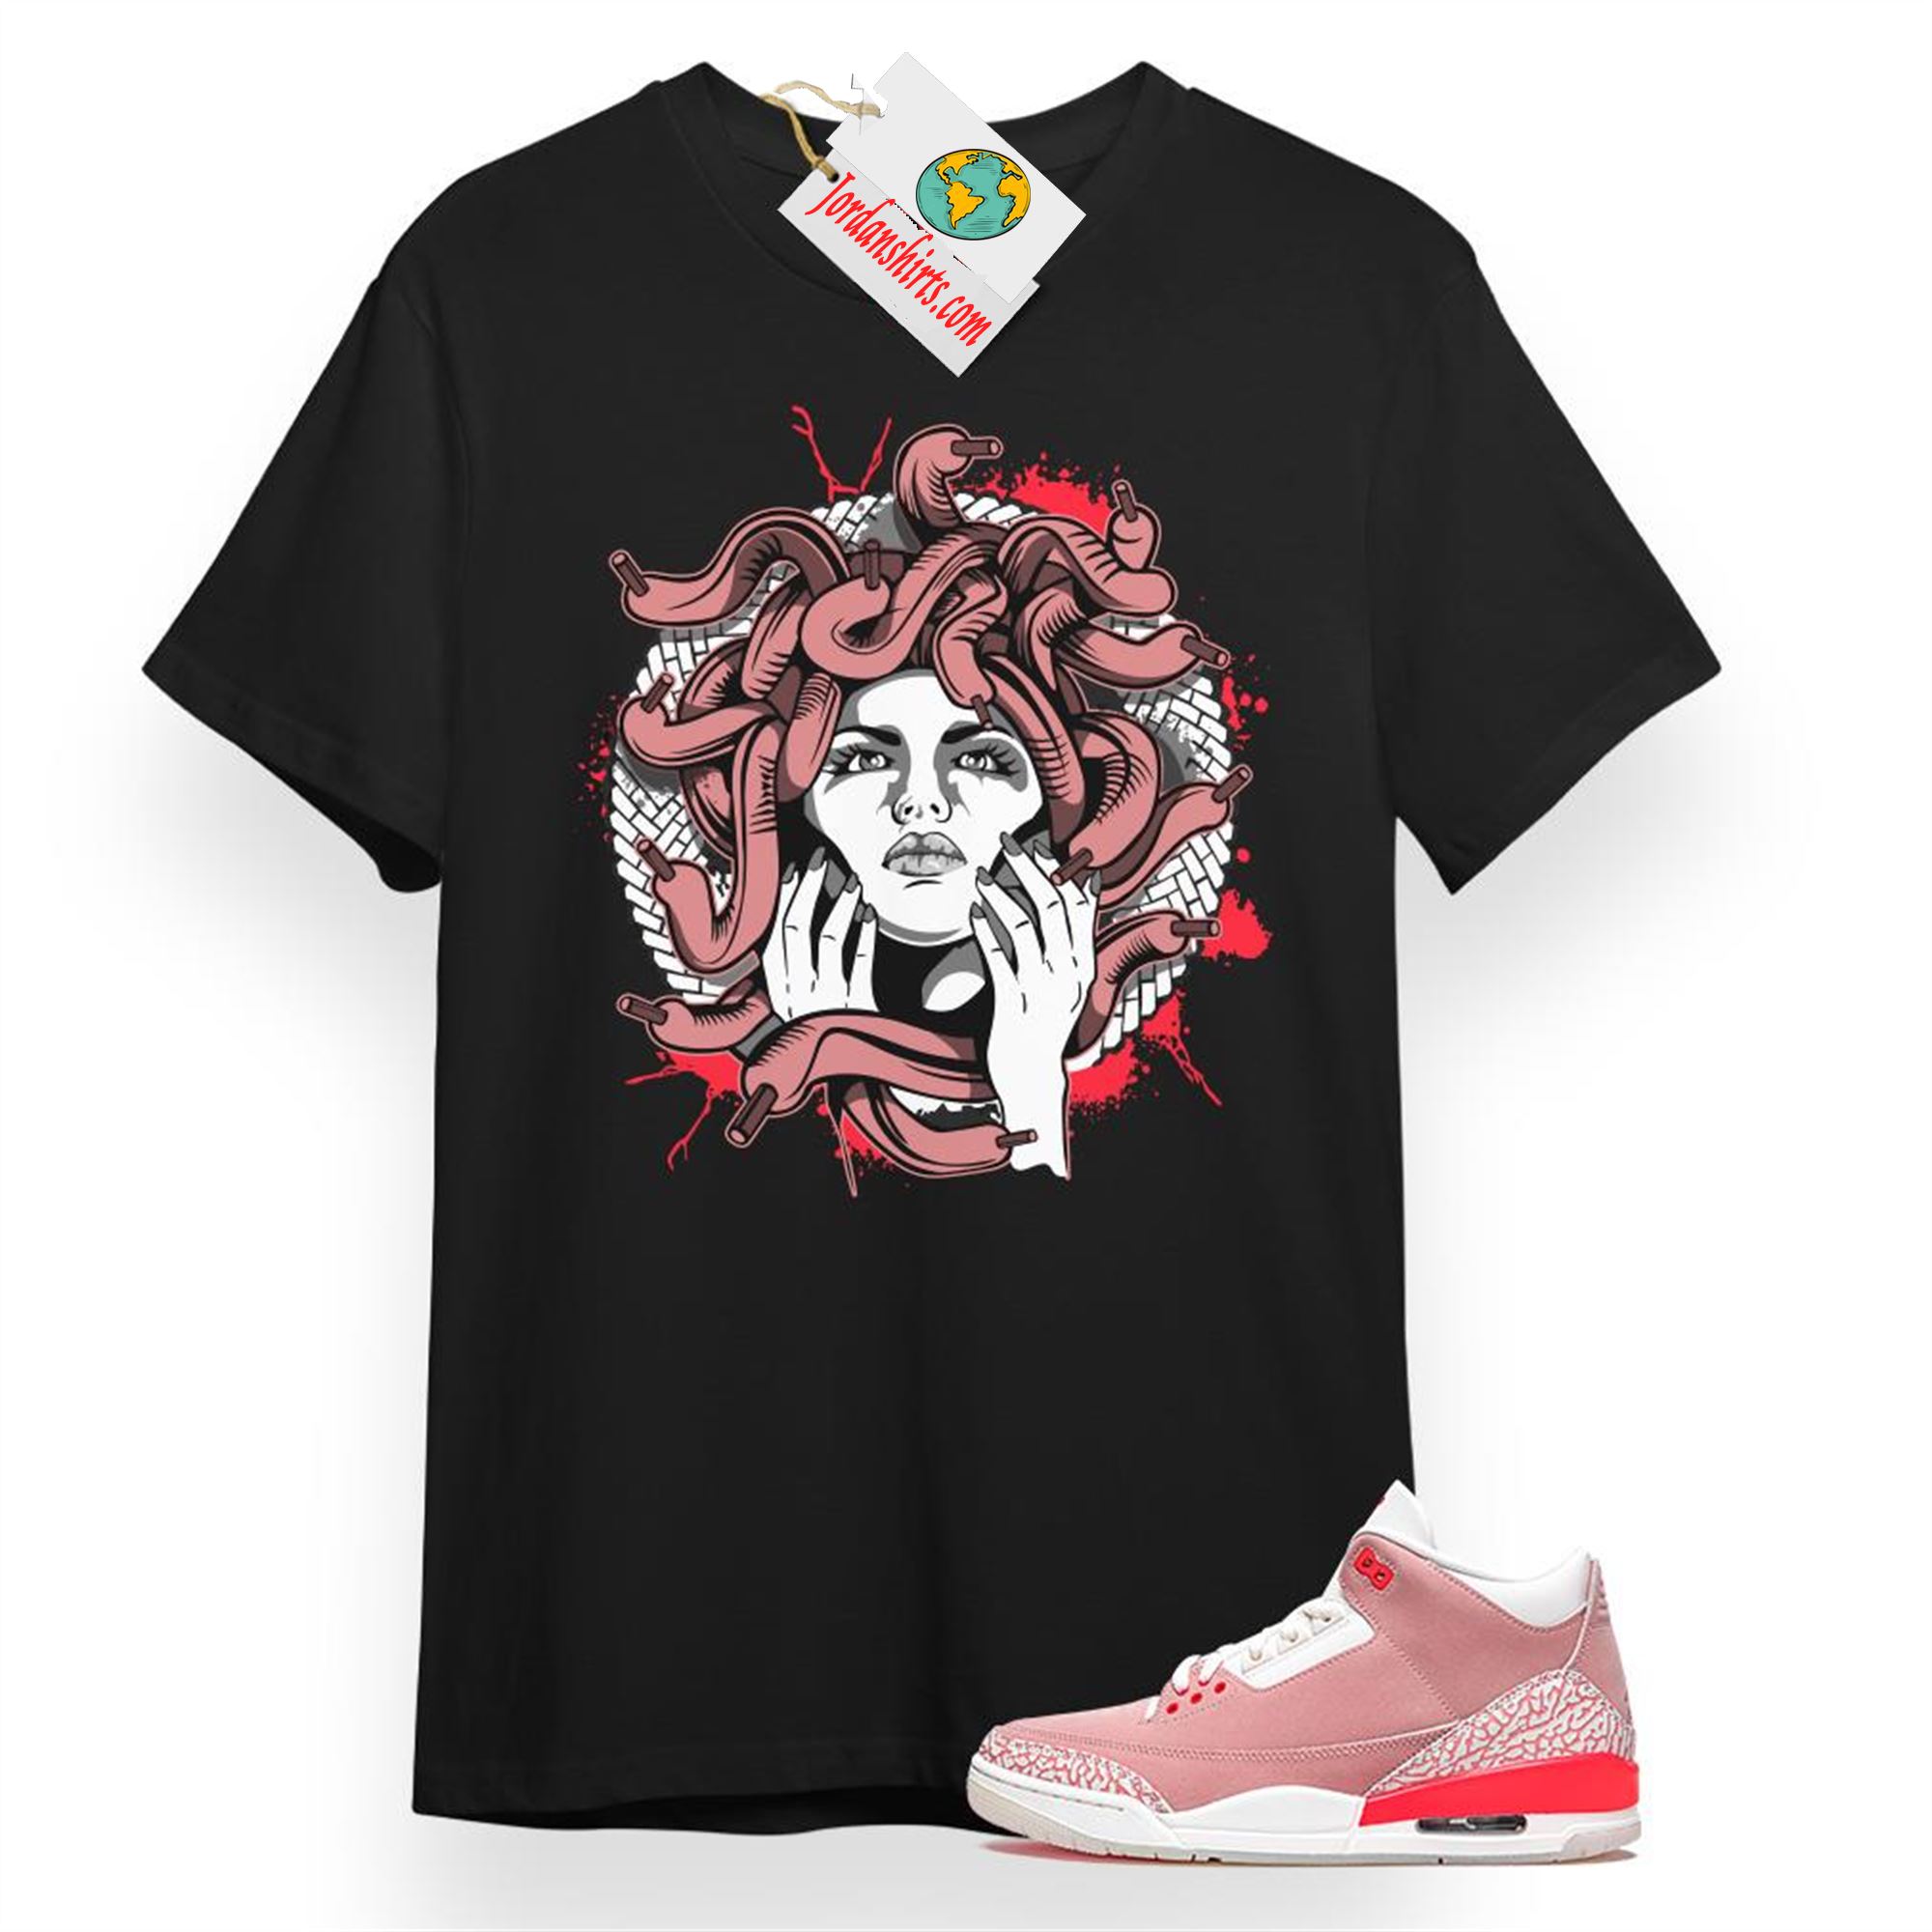 Jordan 3 Shirt, Medusa Black T-shirt Air Jordan 3 Rust Pink 3s Plus Size Up To 5xl